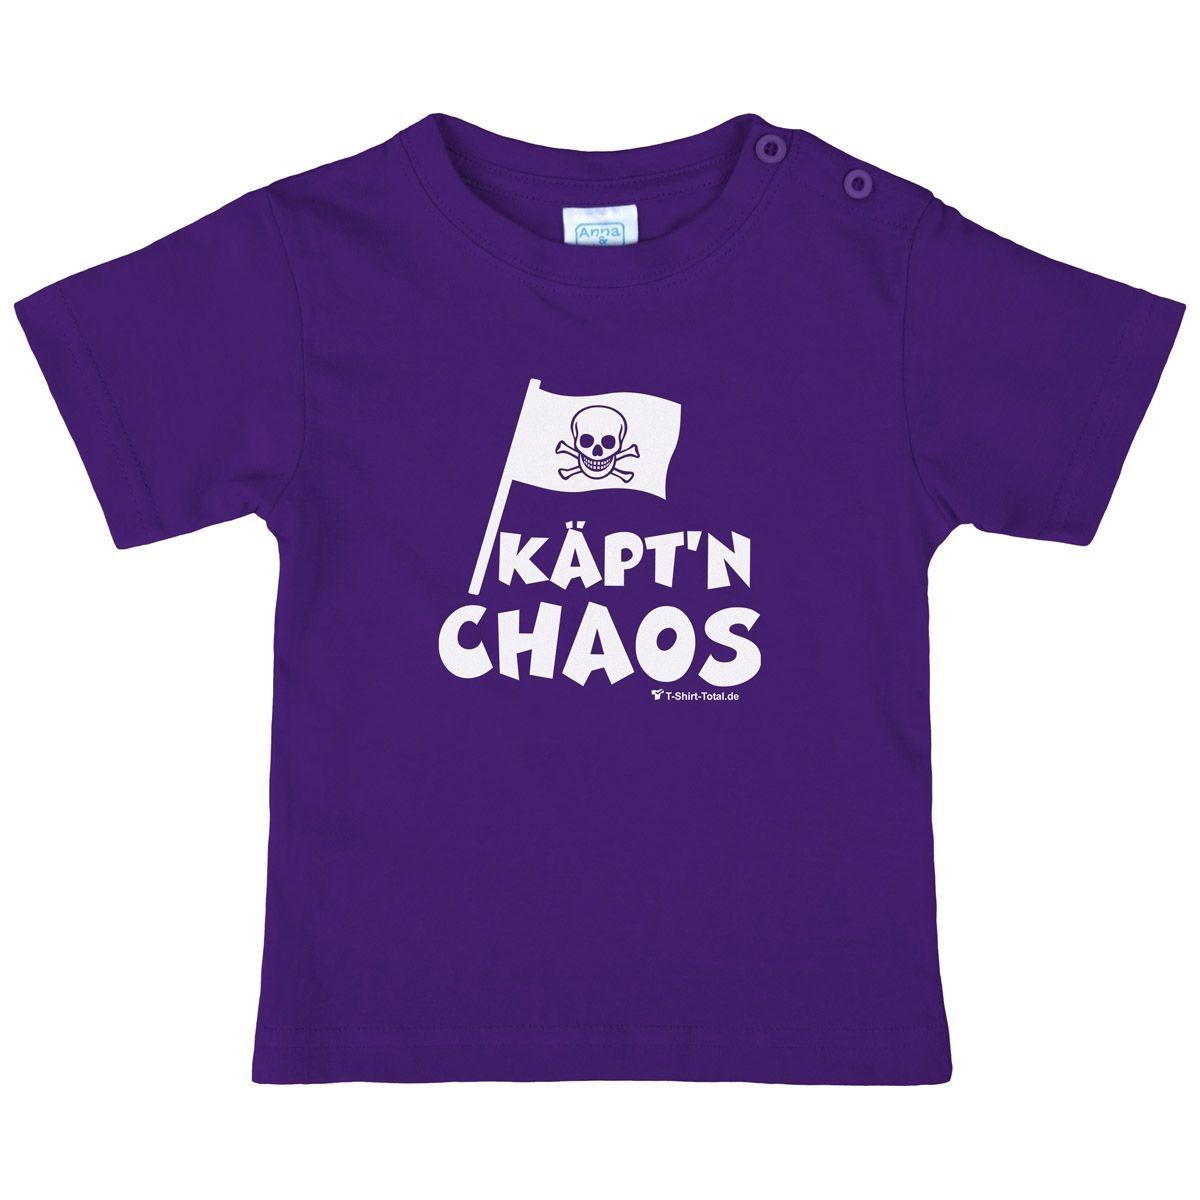 Käptn Chaos Kinder T-Shirt lila 104